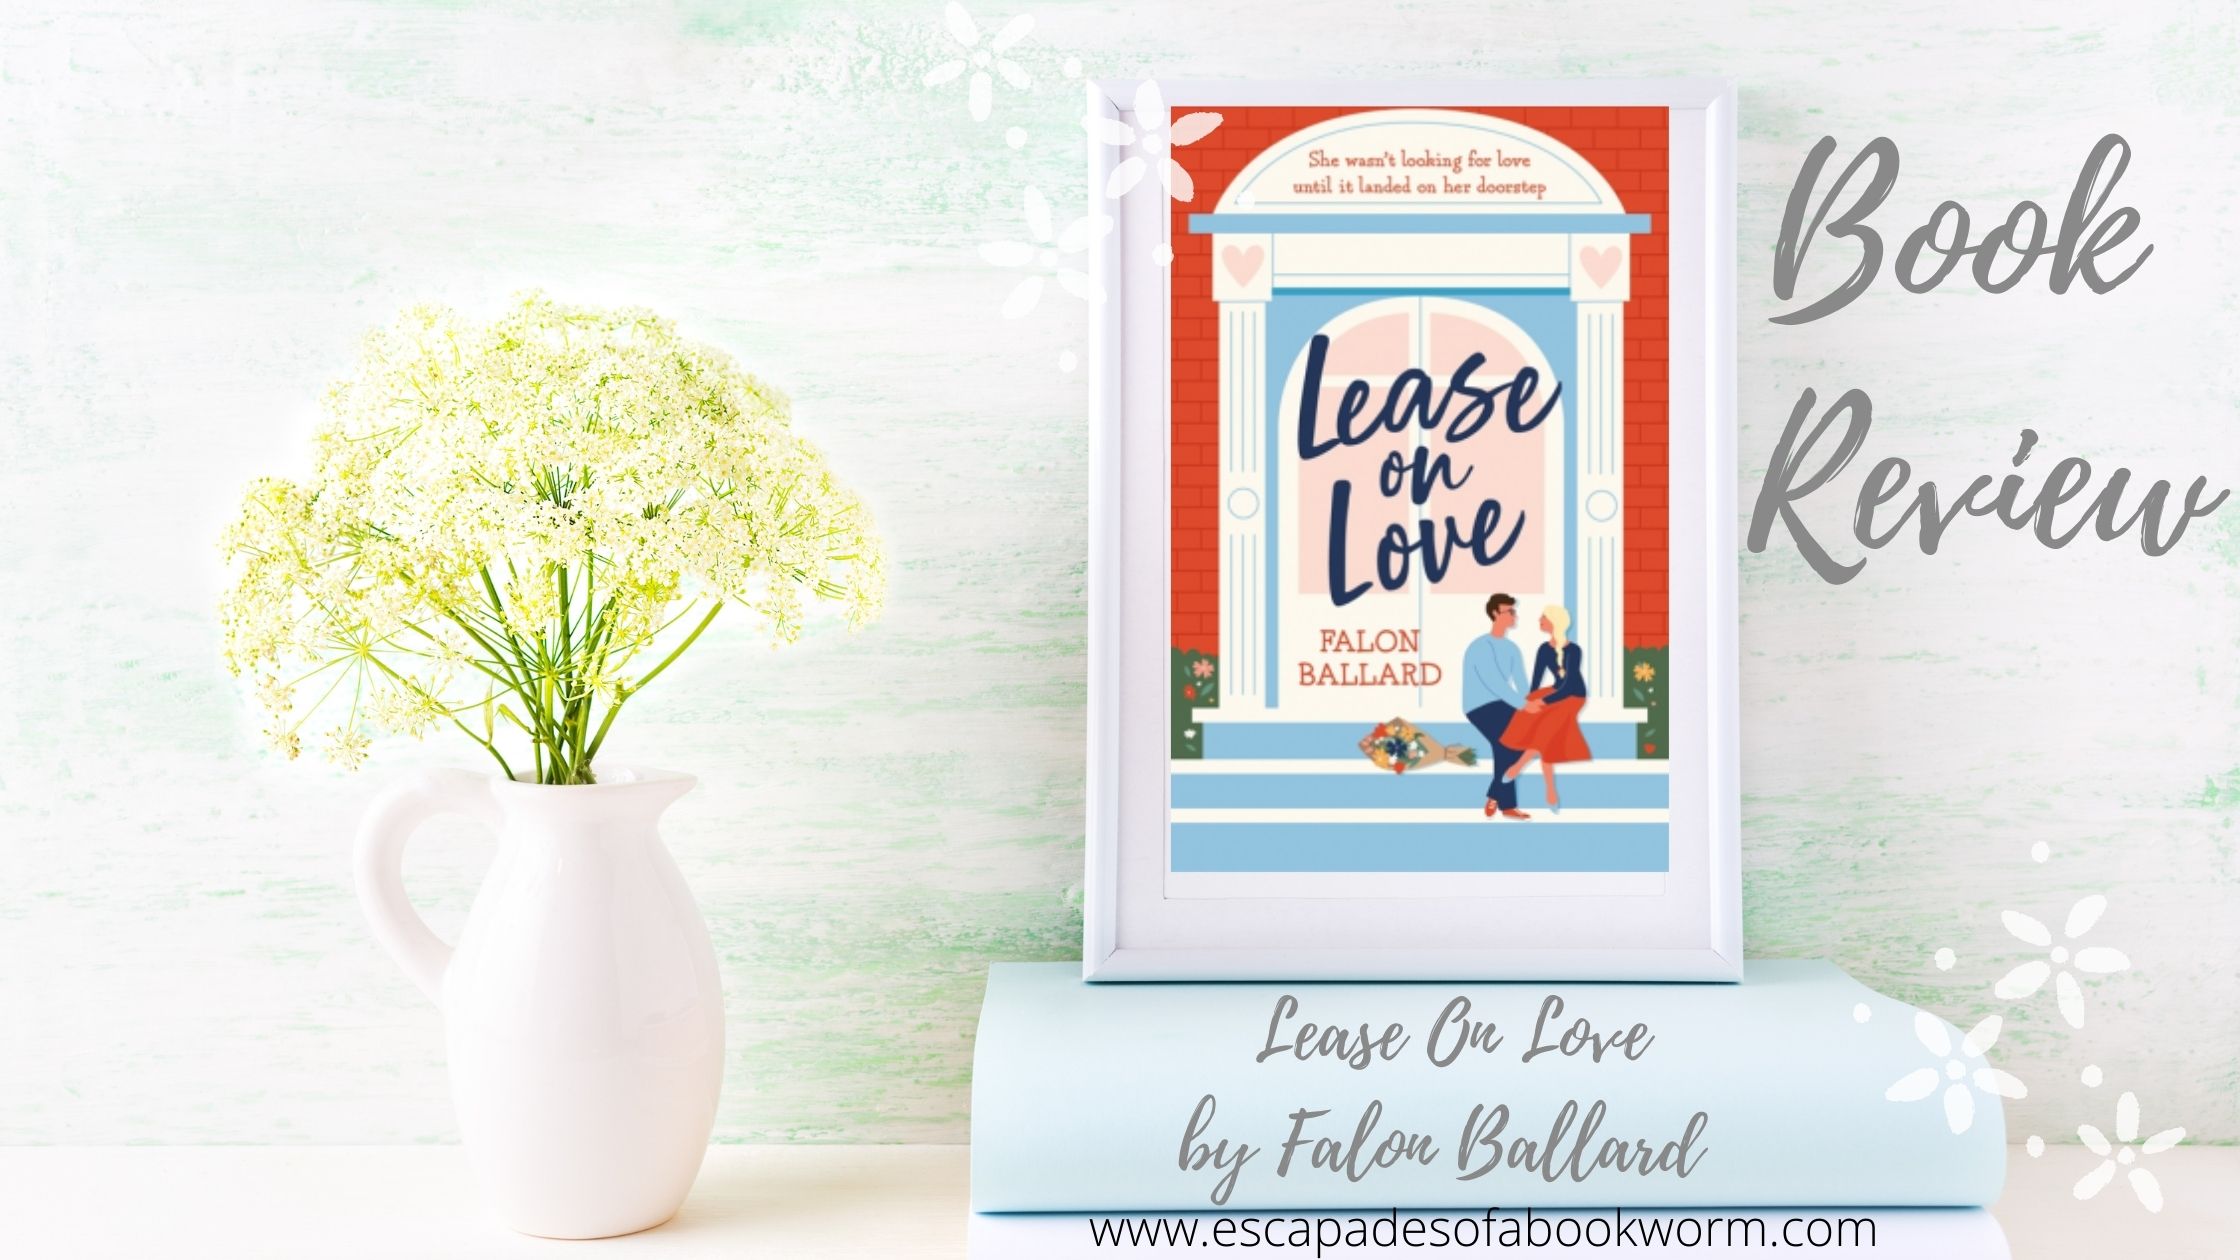 Lease On Love by Falon Ballard